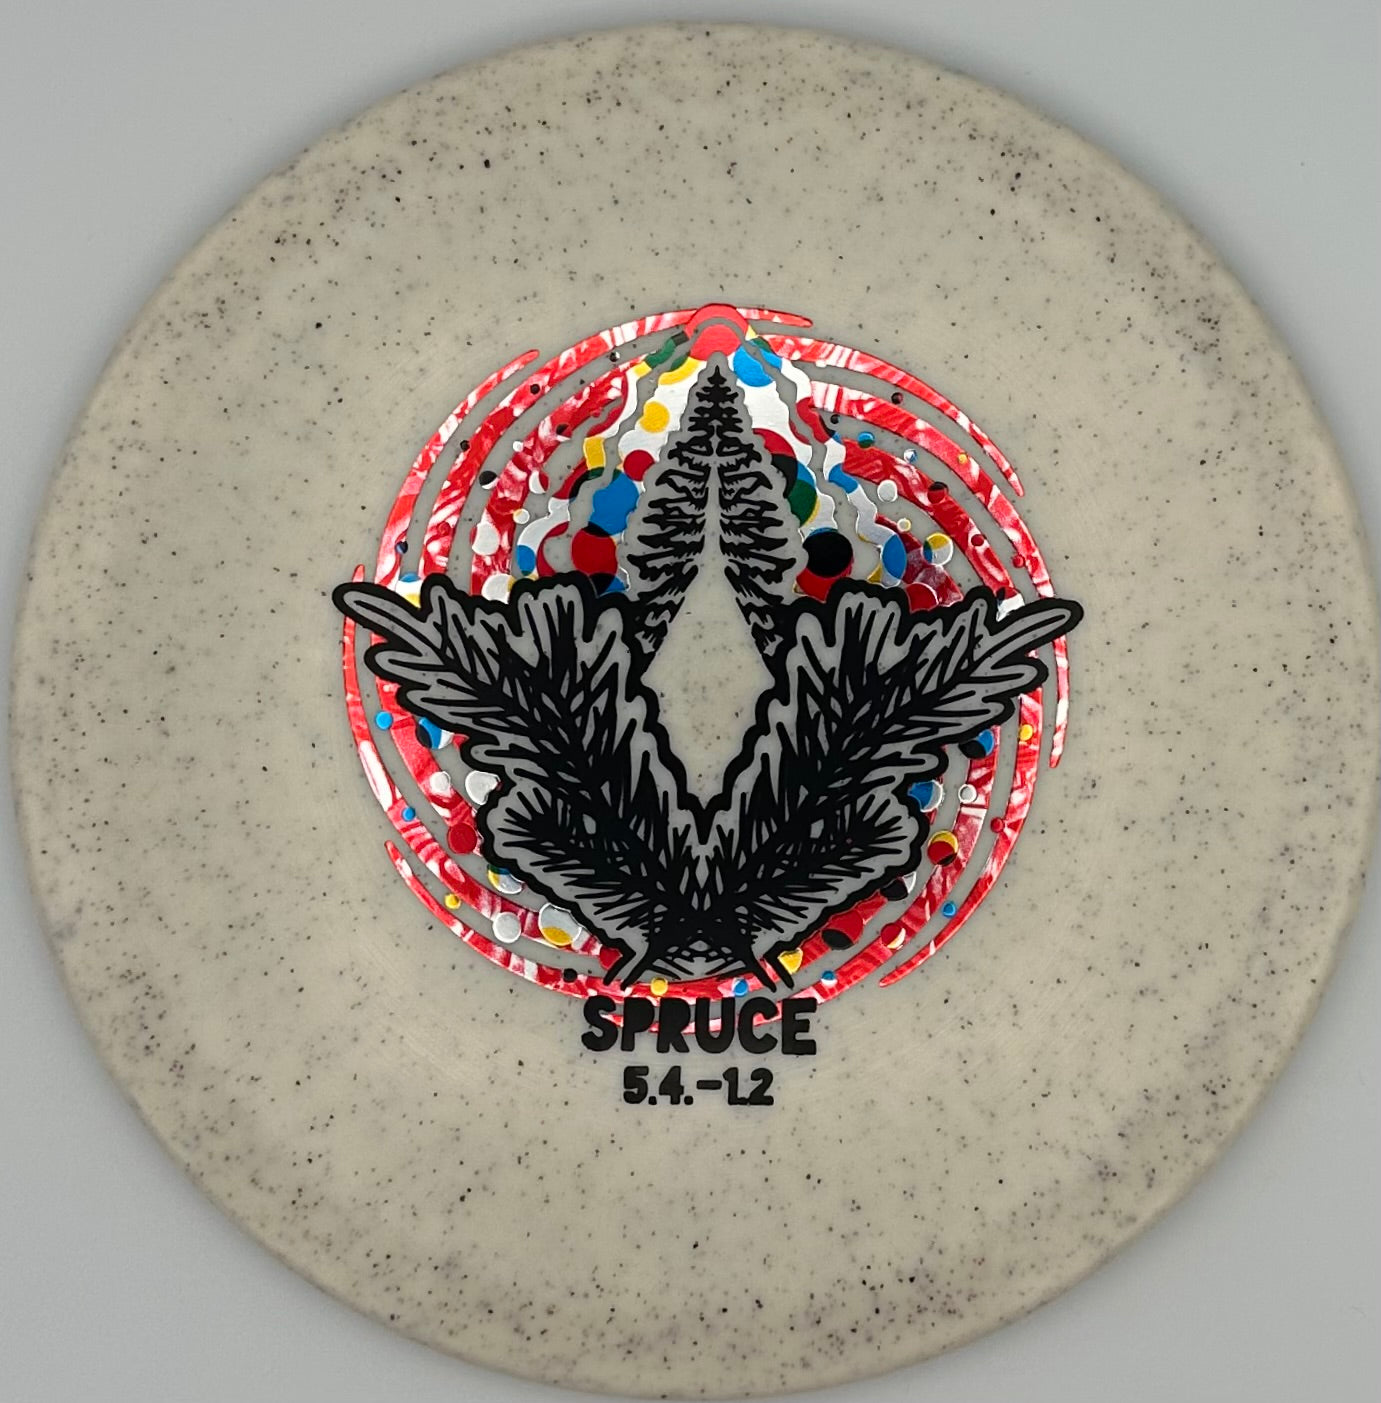 AGL Discs - Cookies and Cream Alpine Hemp Spruce (Triple Register Stamp)